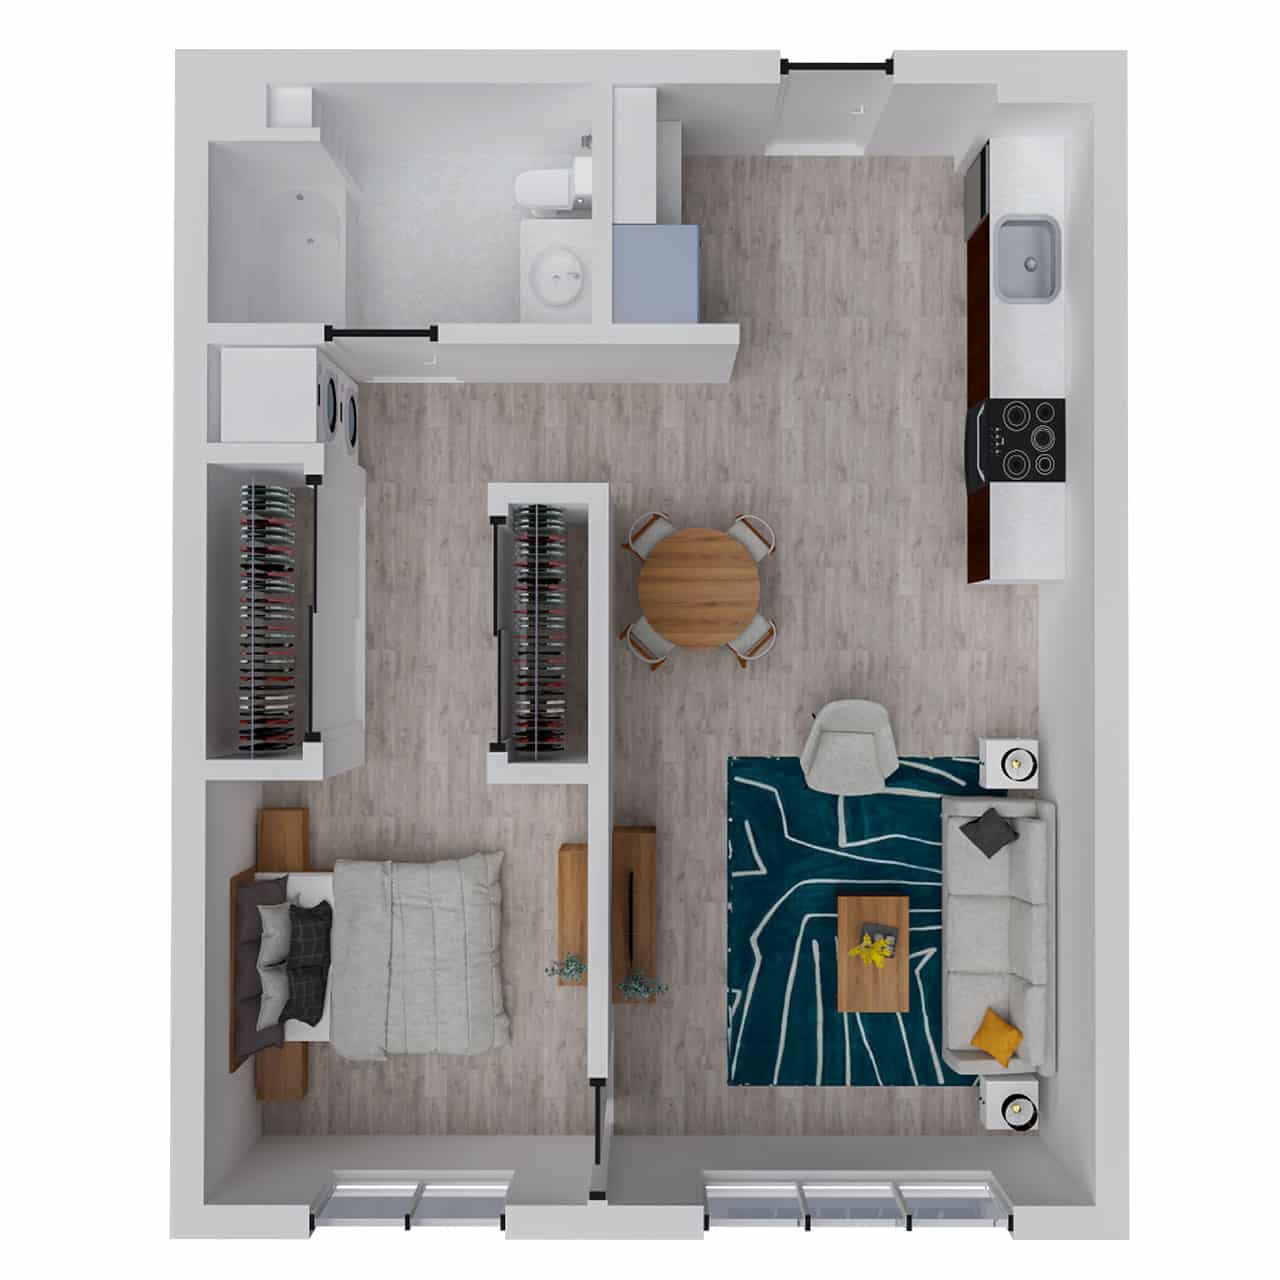 Attwell, A7 Loft floor plan, one bedroom, one bath.